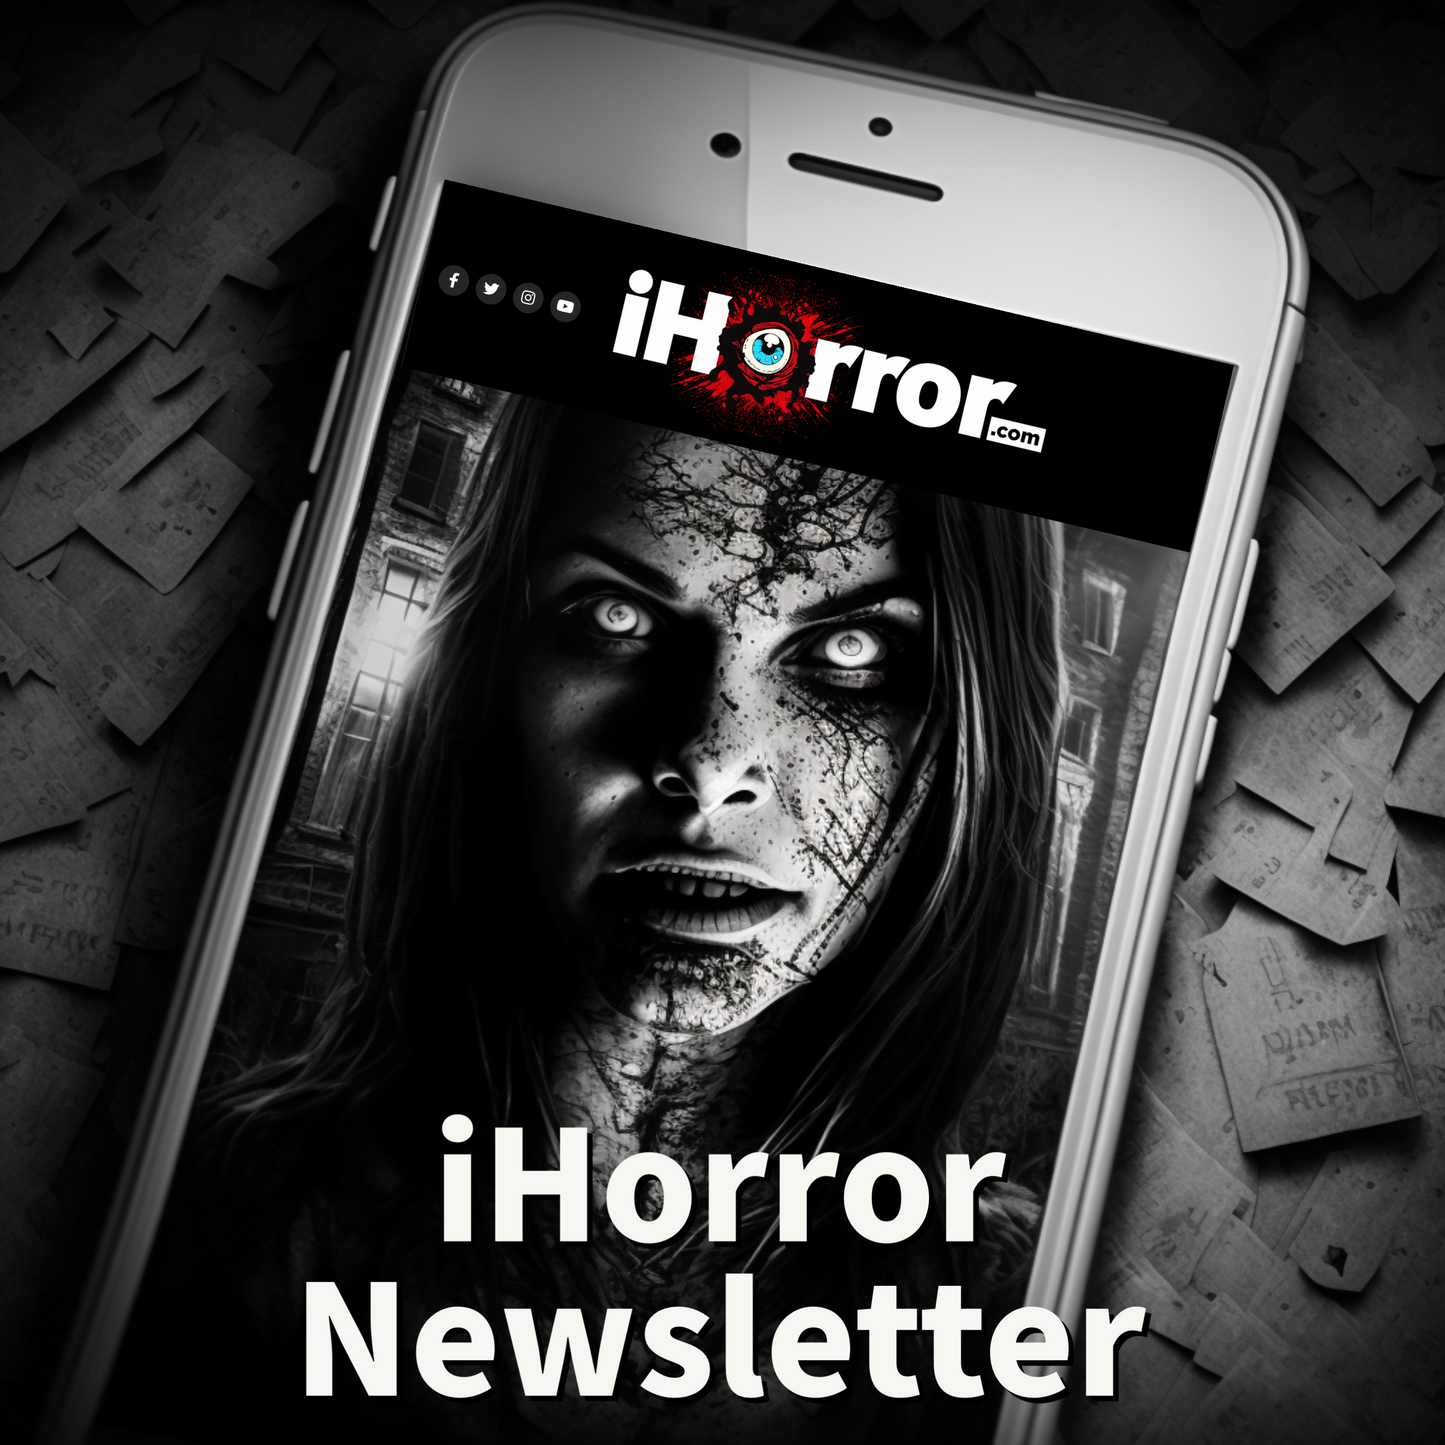 iHorror Newsletter Ad